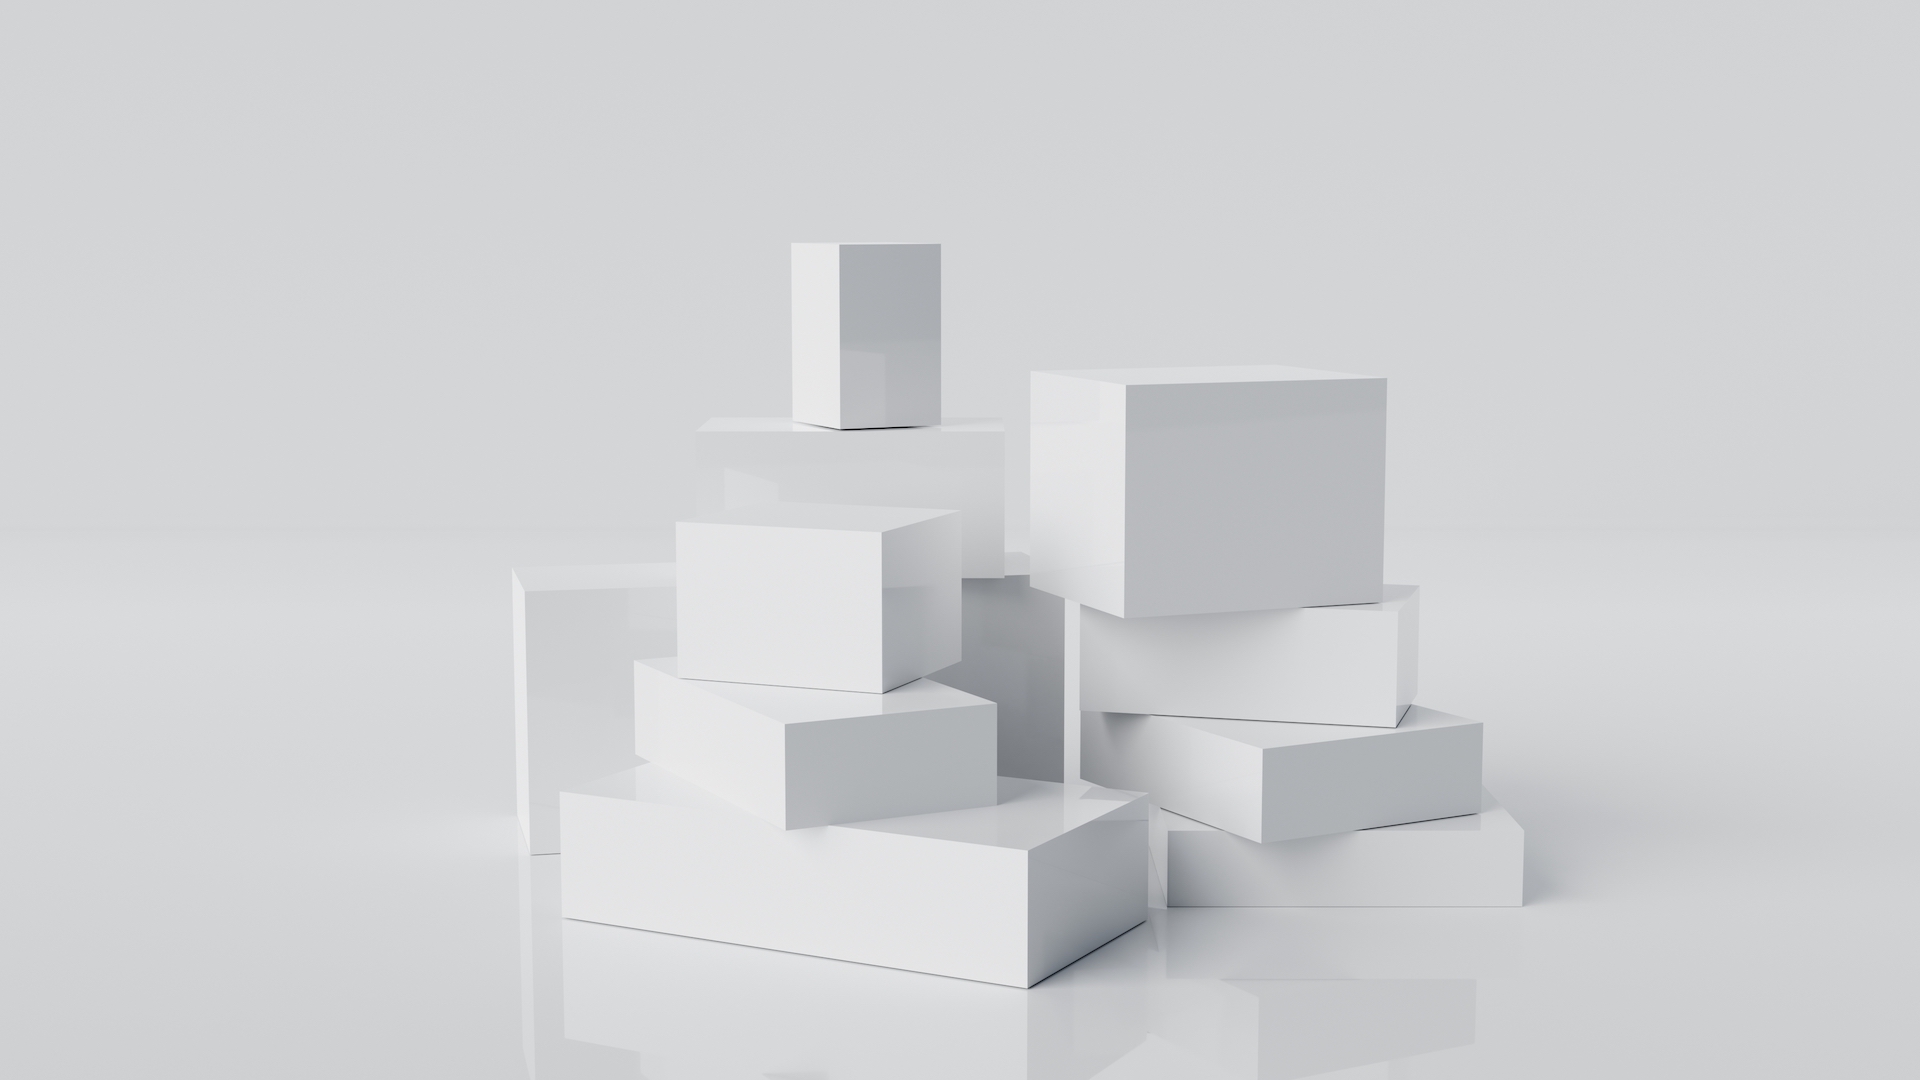 abstract white cube block moving animation backgro 2022 11 02 00 16 25 utc